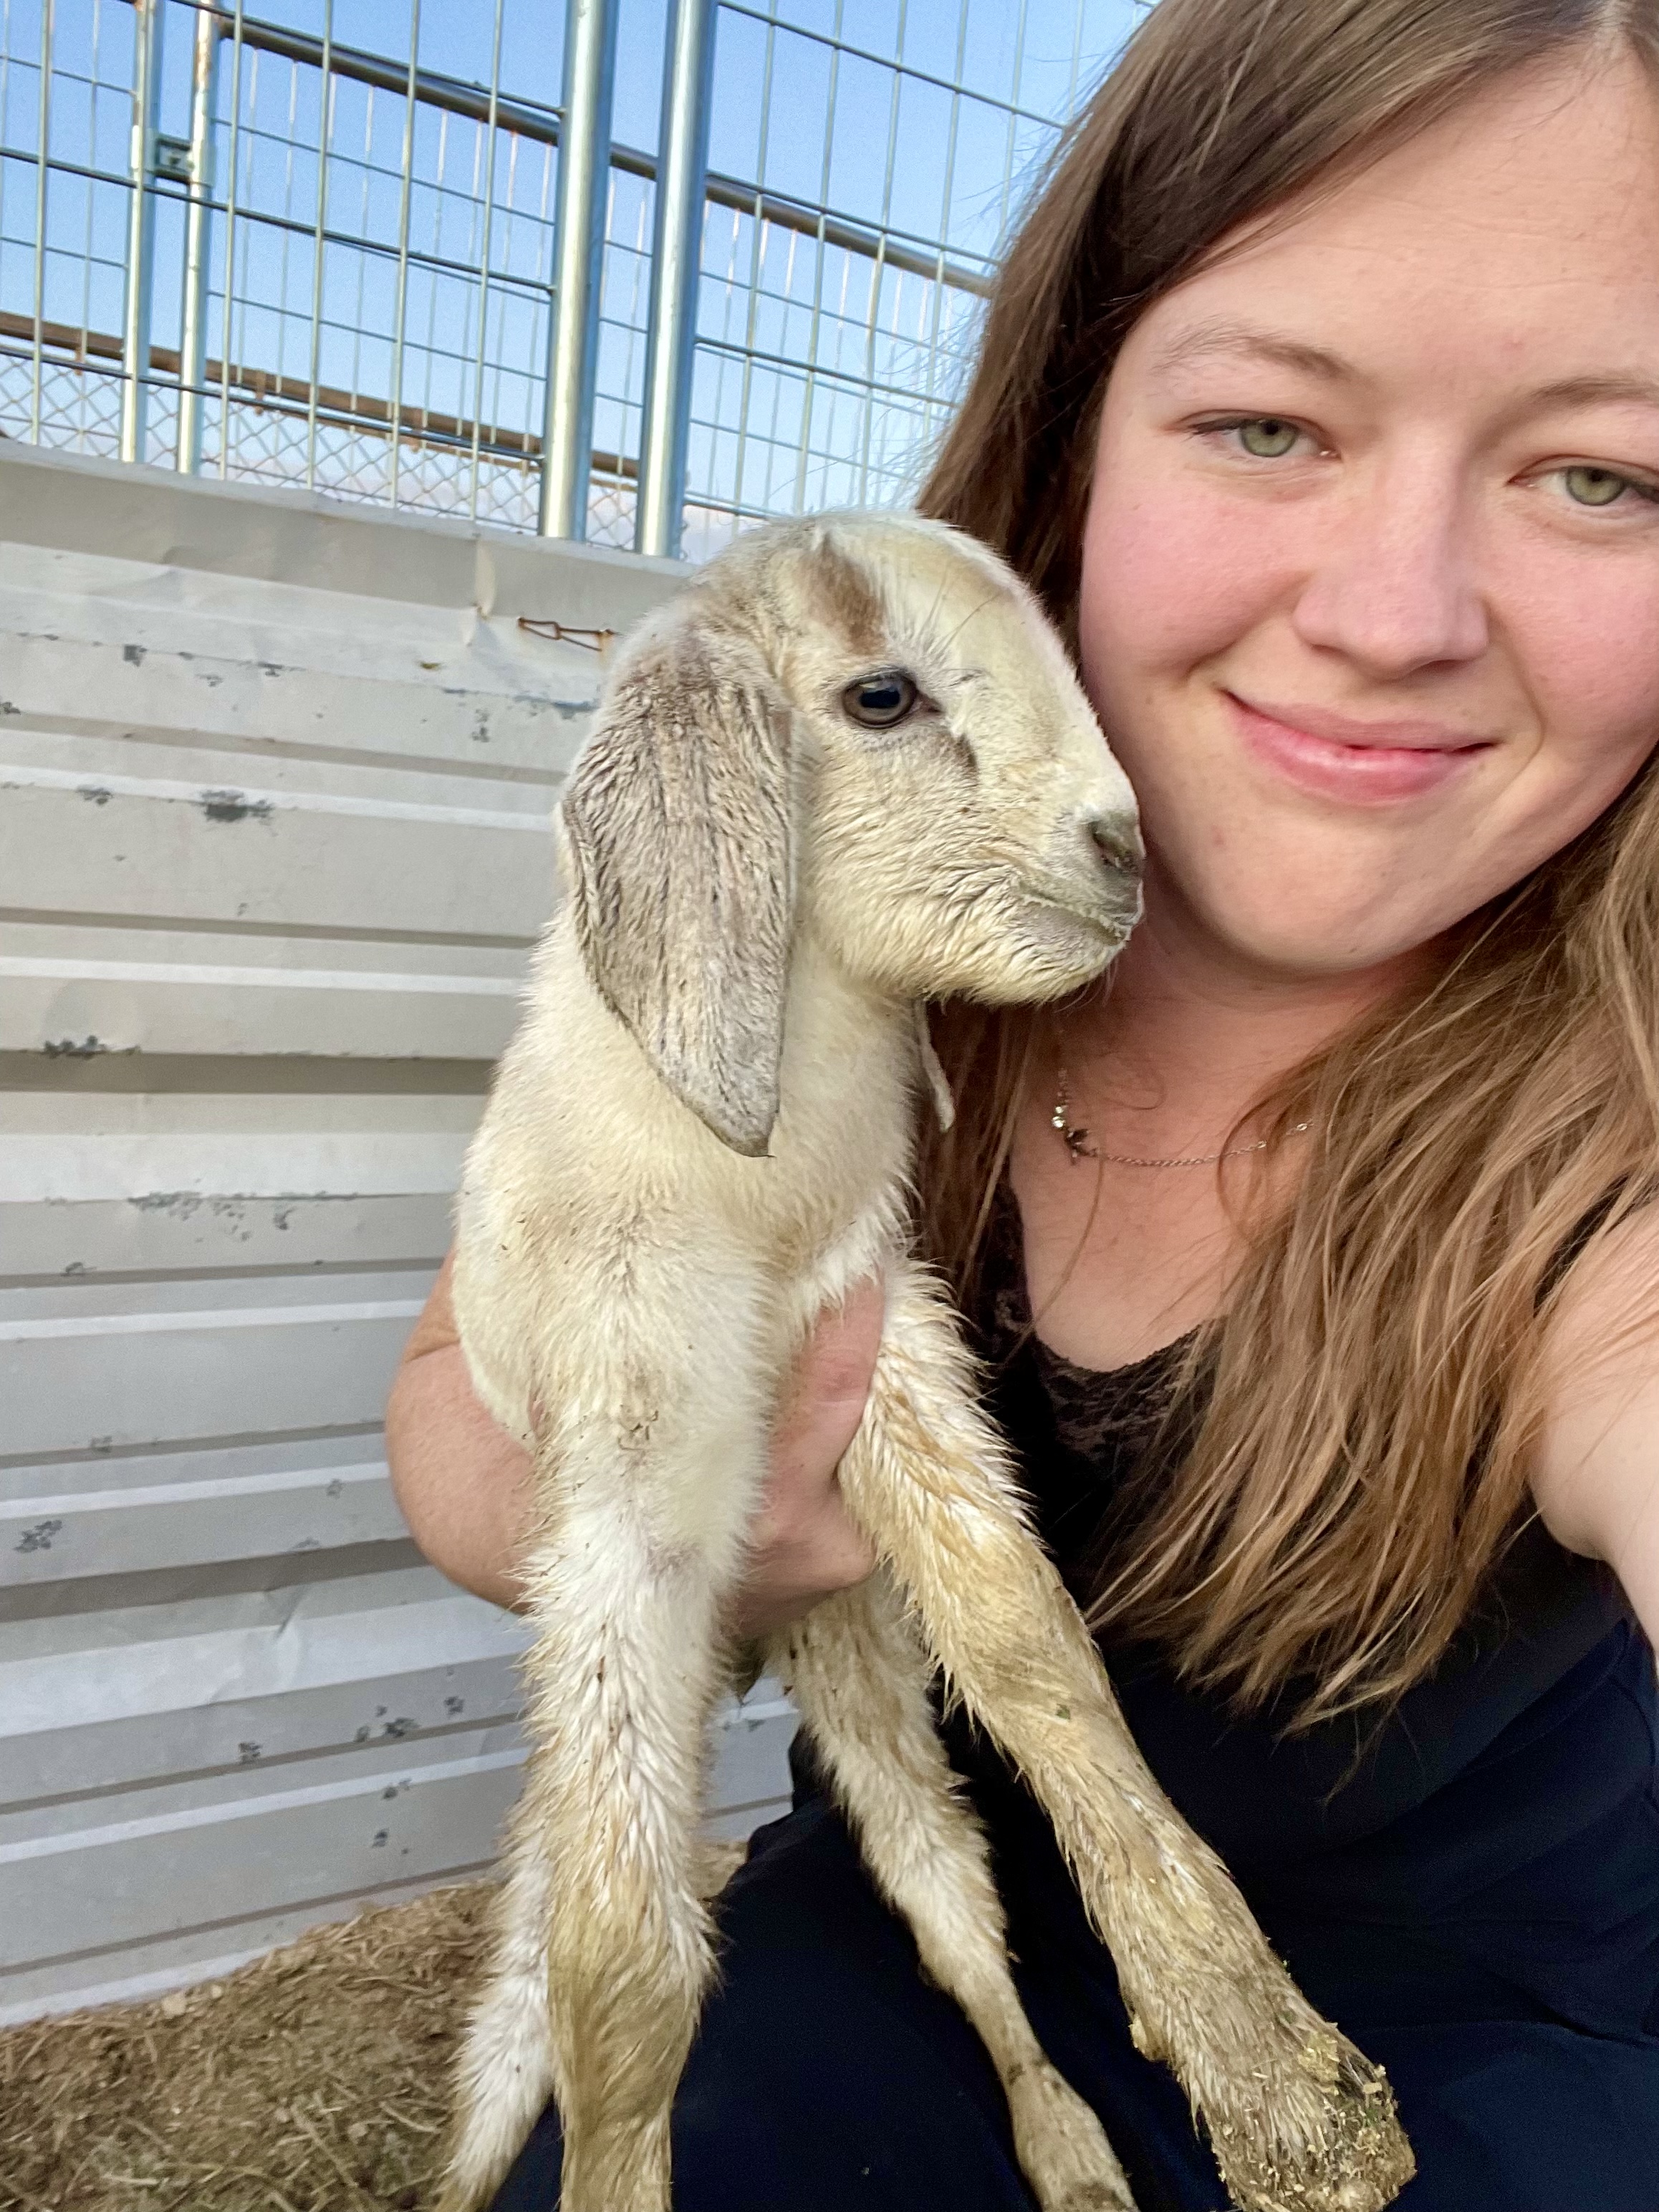 julia holding baby goat